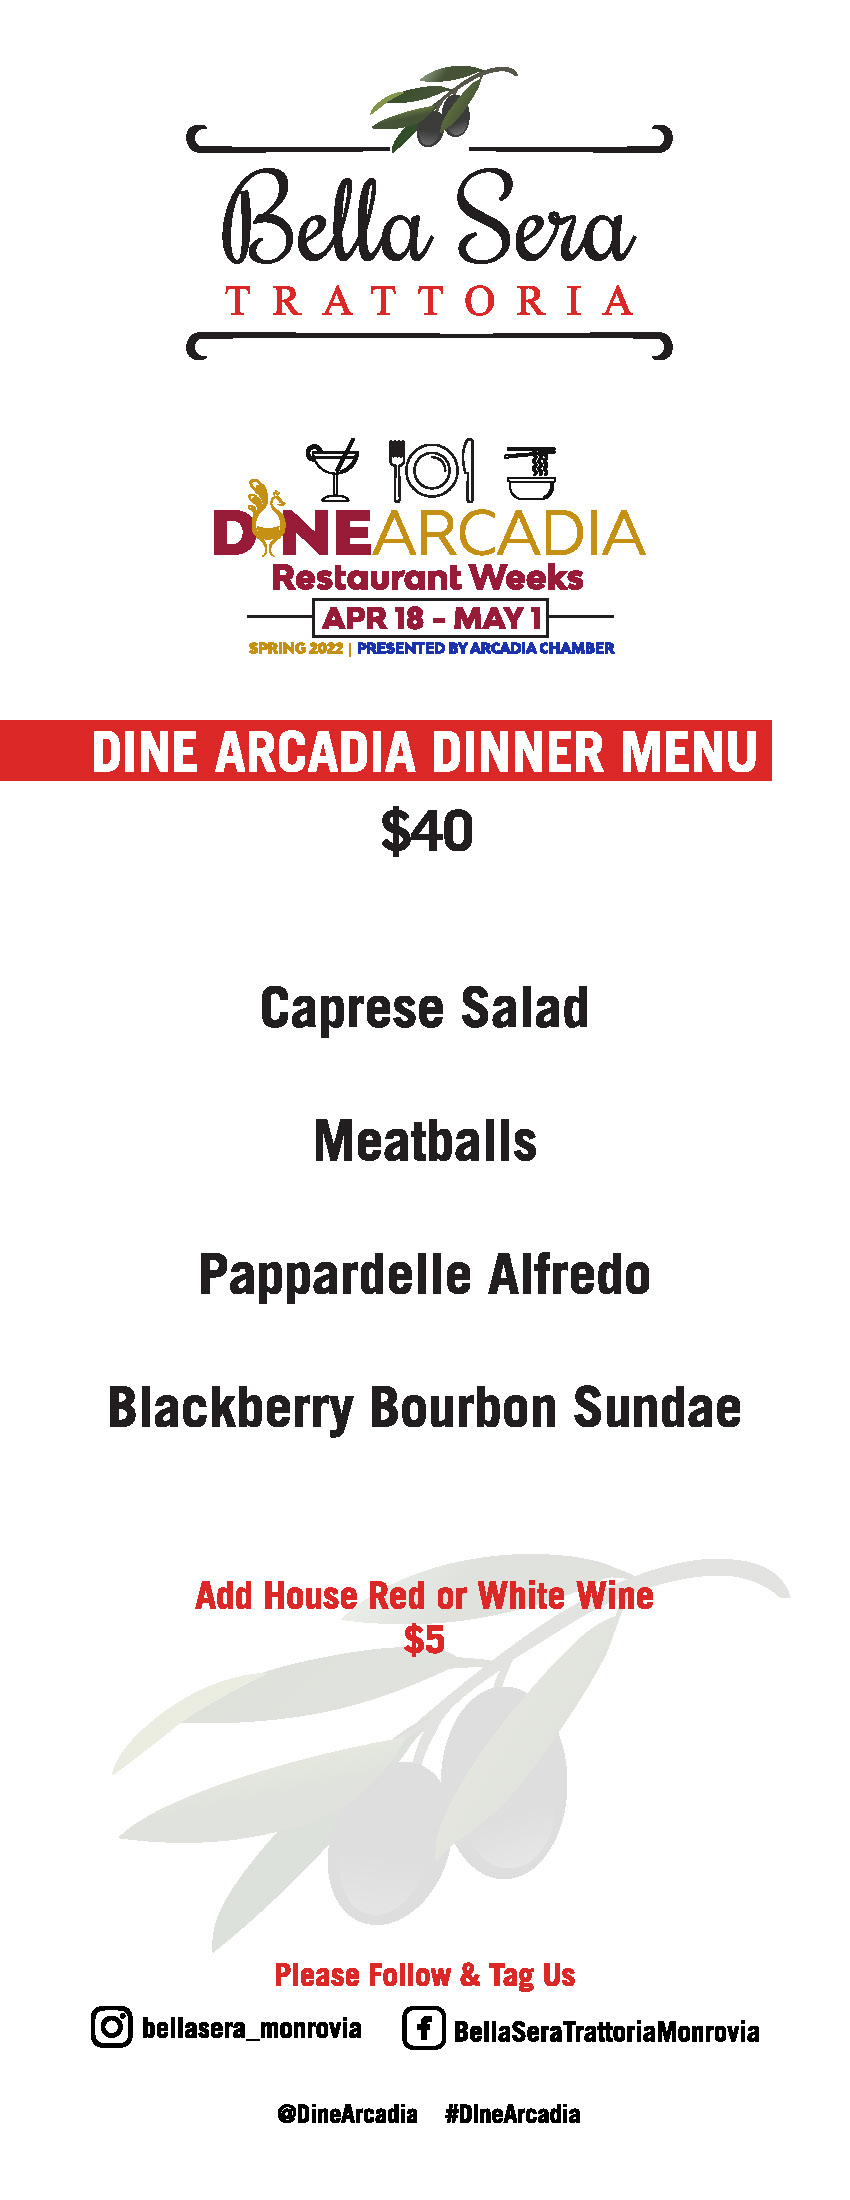 Bella Sera dinner menu for Dine Arcadia